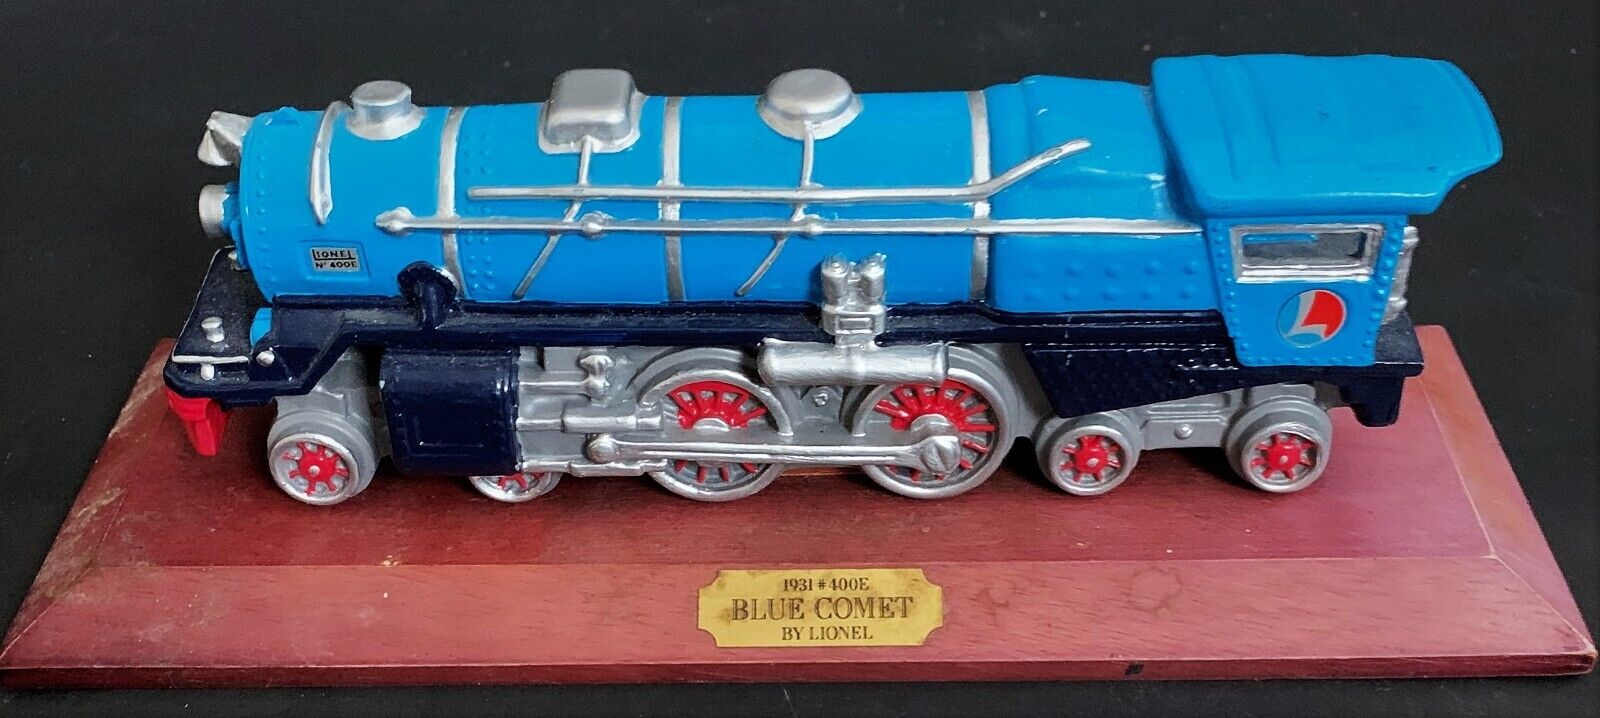 Collectible Avon Lionel # 400E Blue Comet Train good condition – comes with base